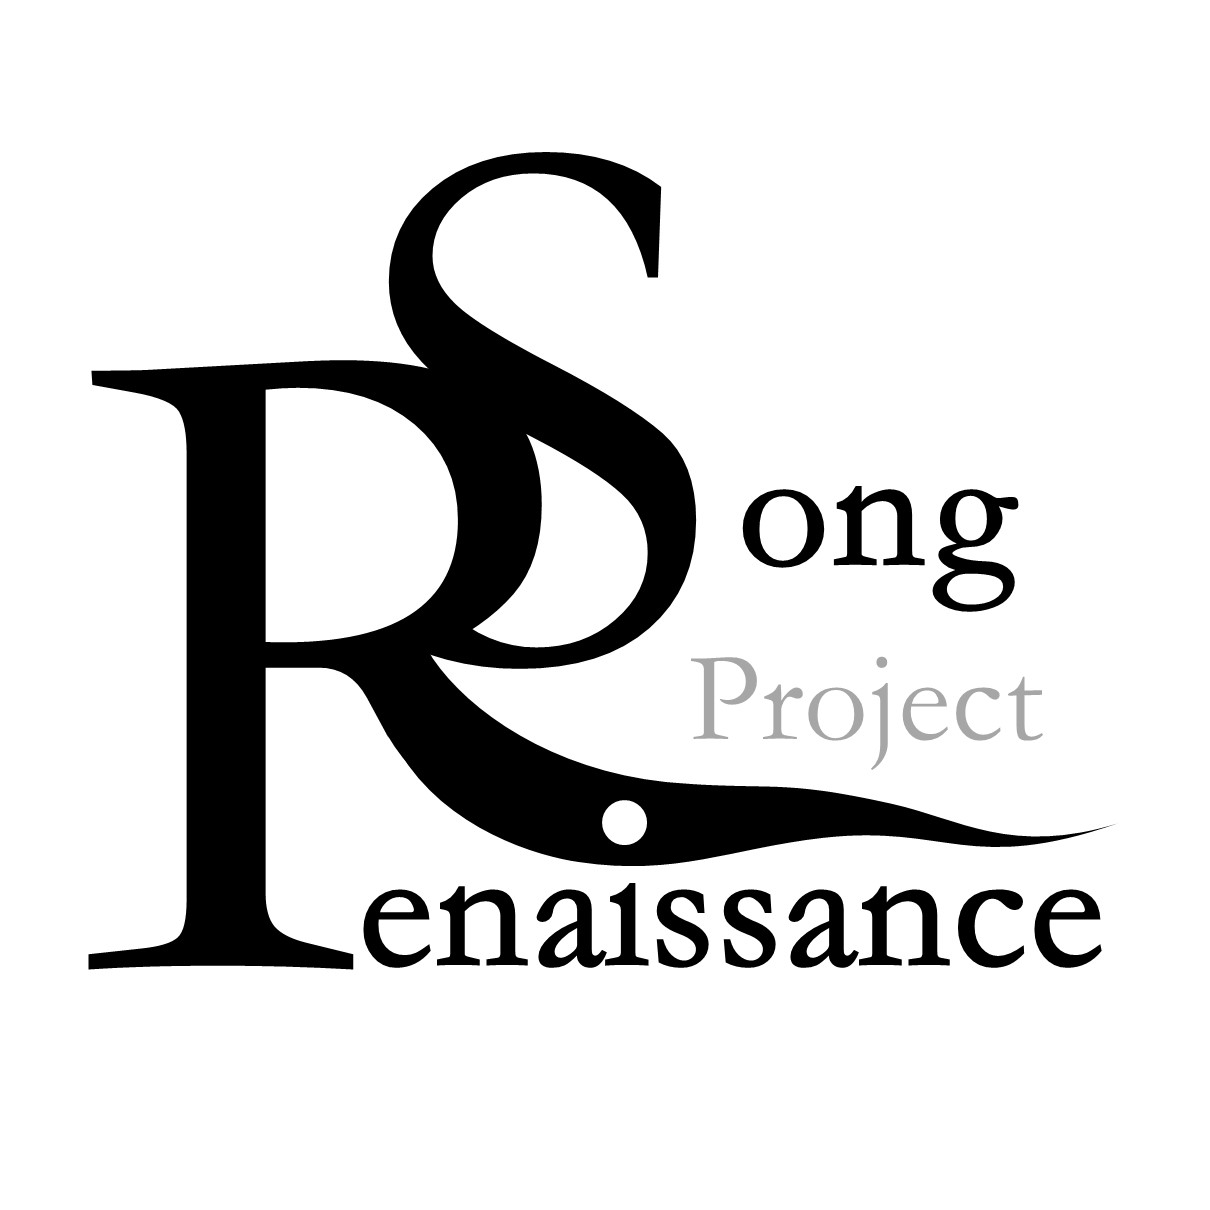 Song Renaissance Project